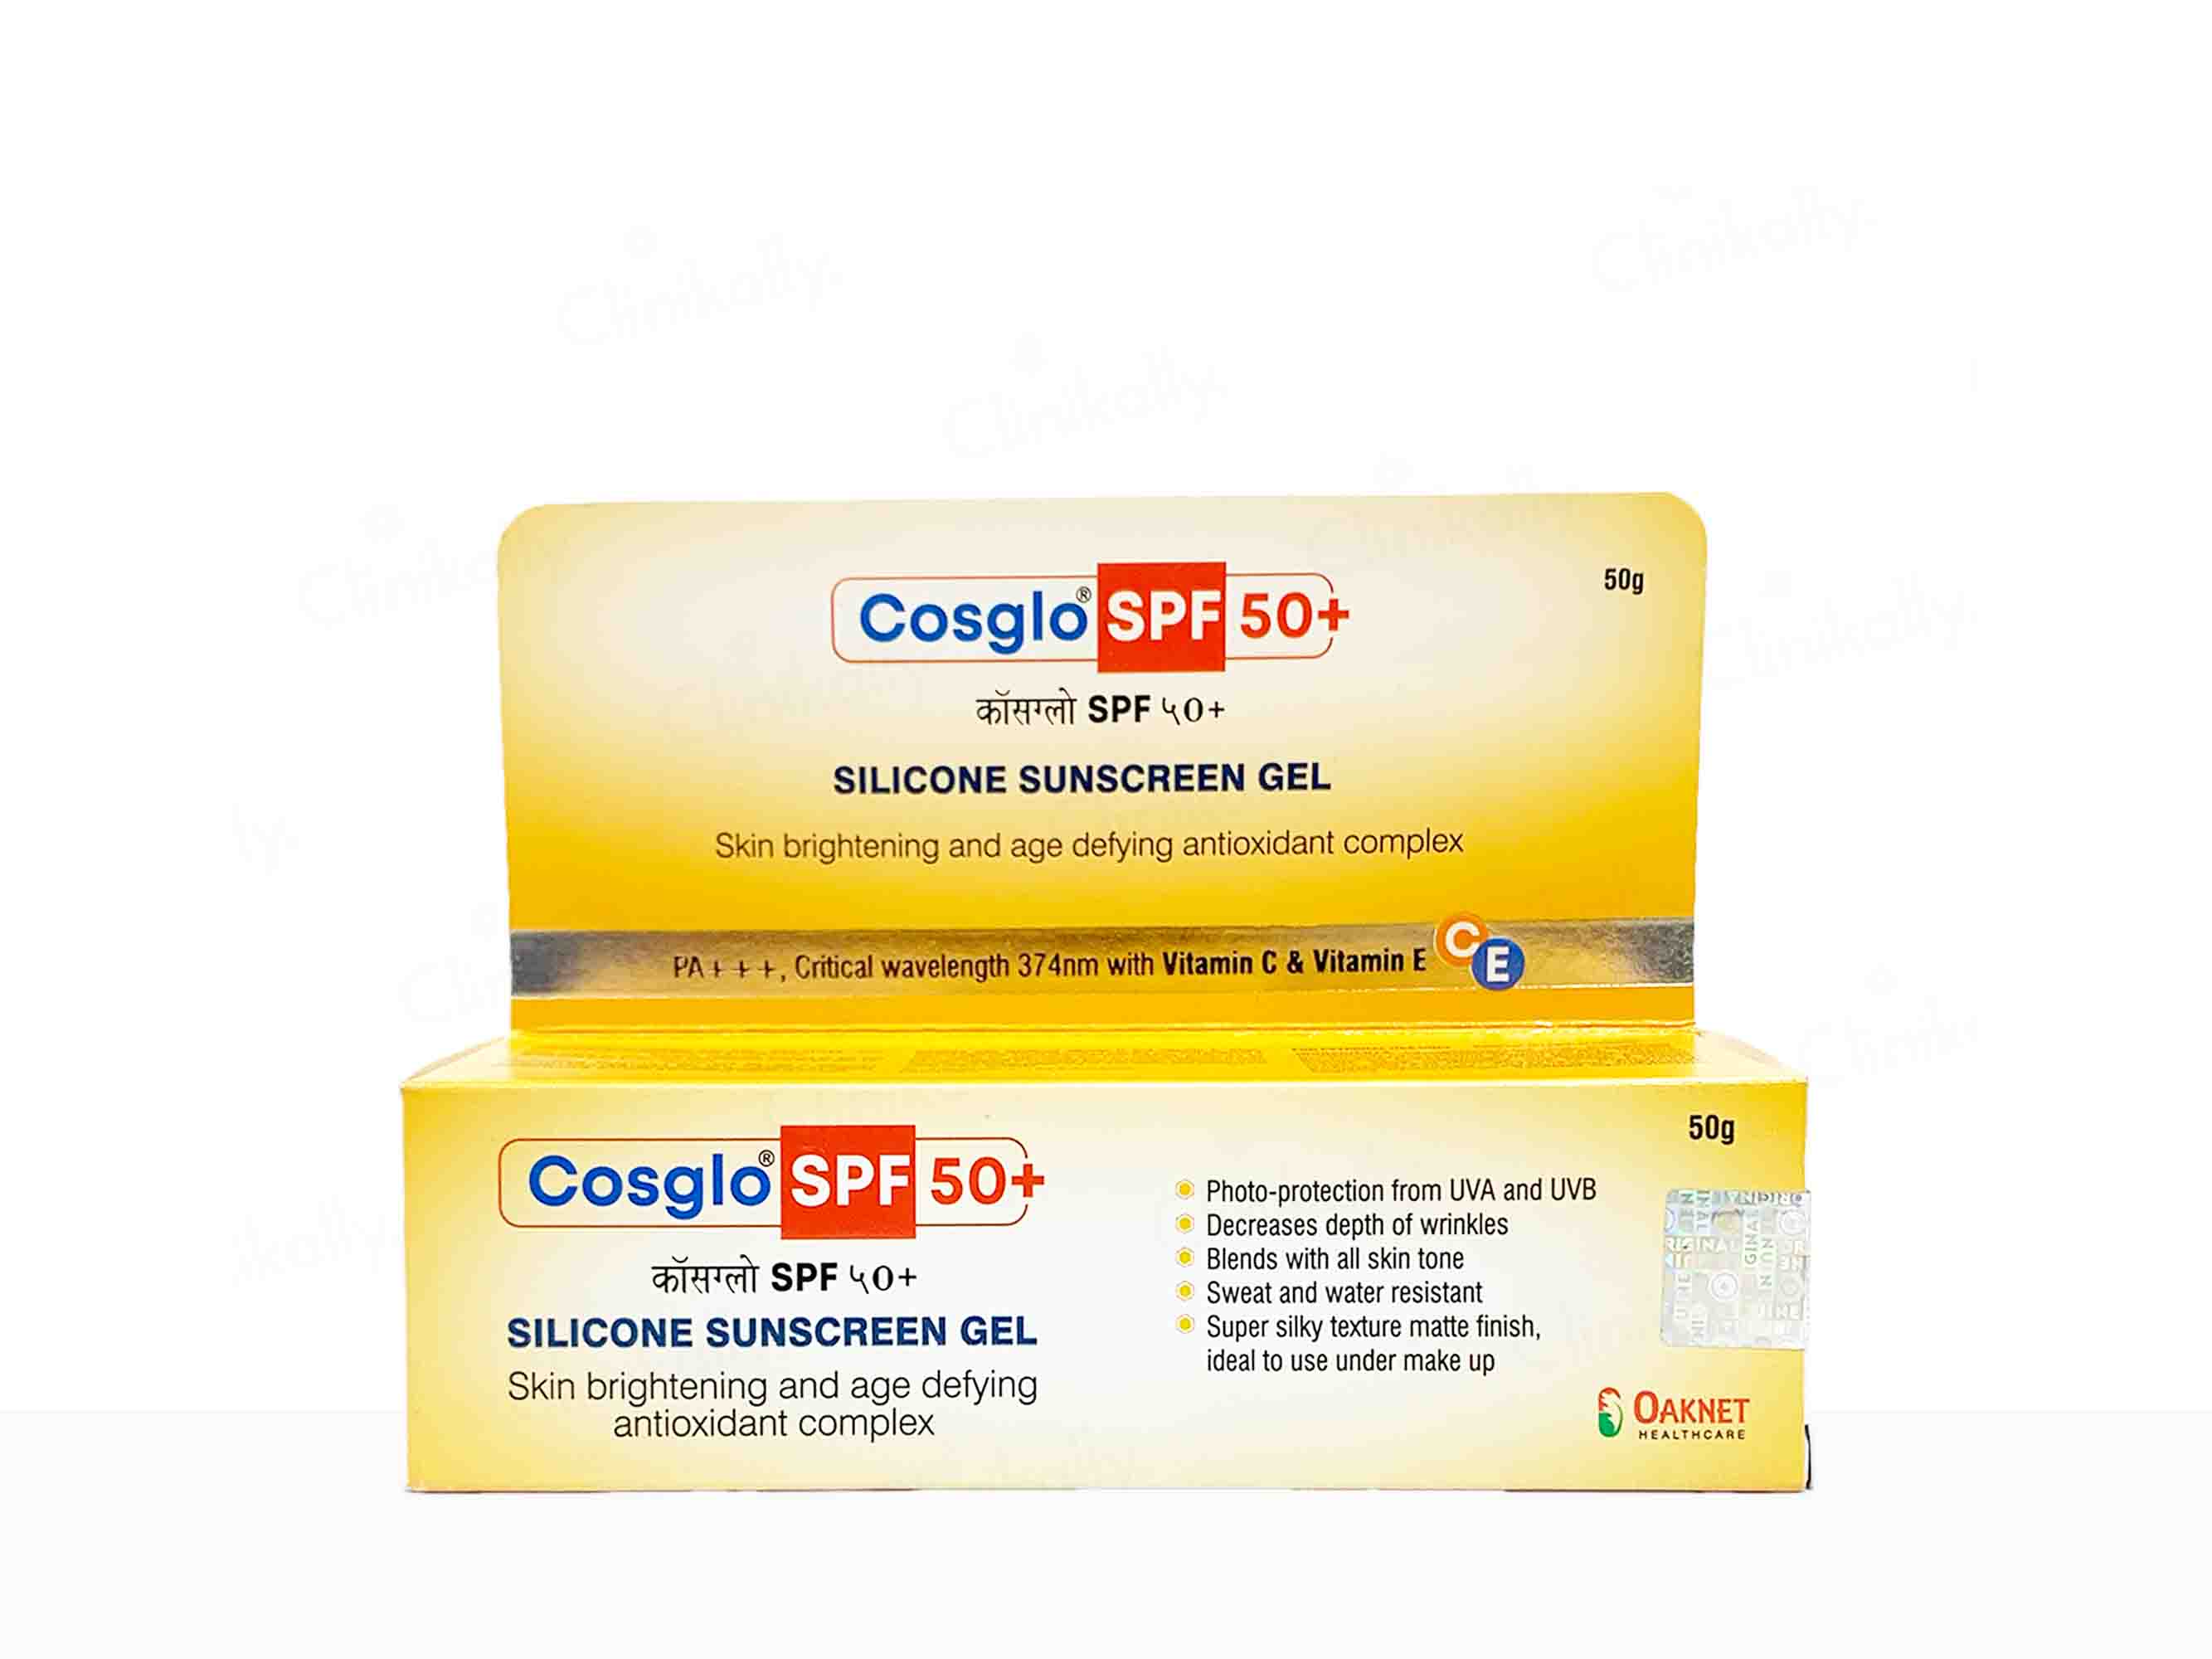 Cosglo Silicone Sunscreen Gel SPF 50+